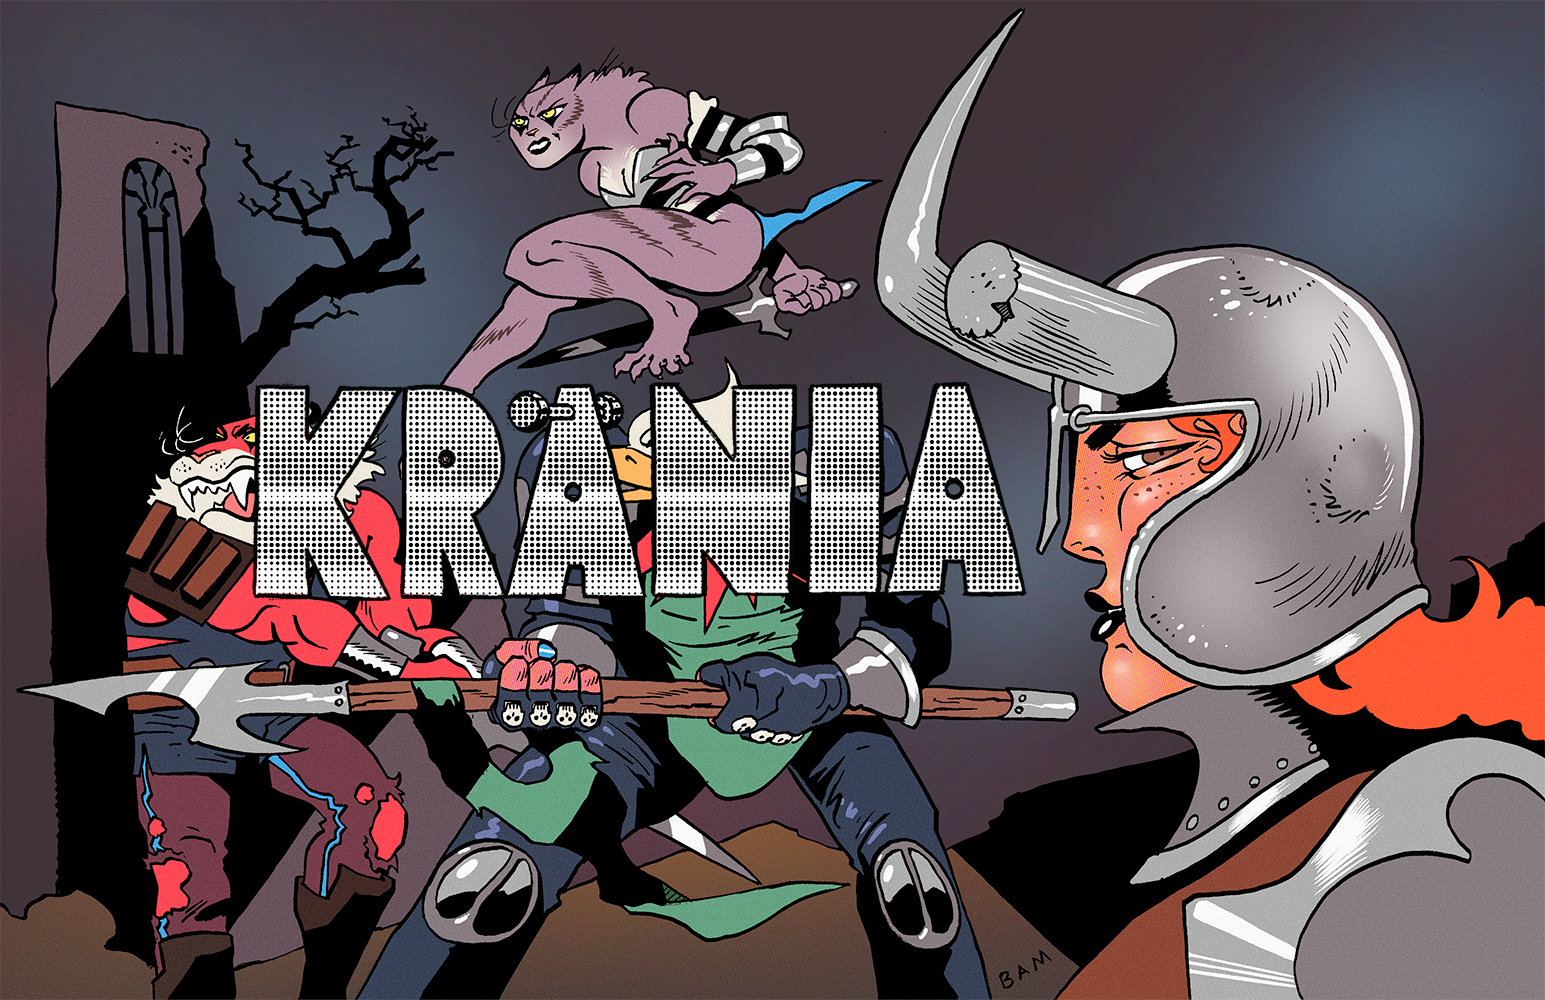 Krania #1 by Brian McCray